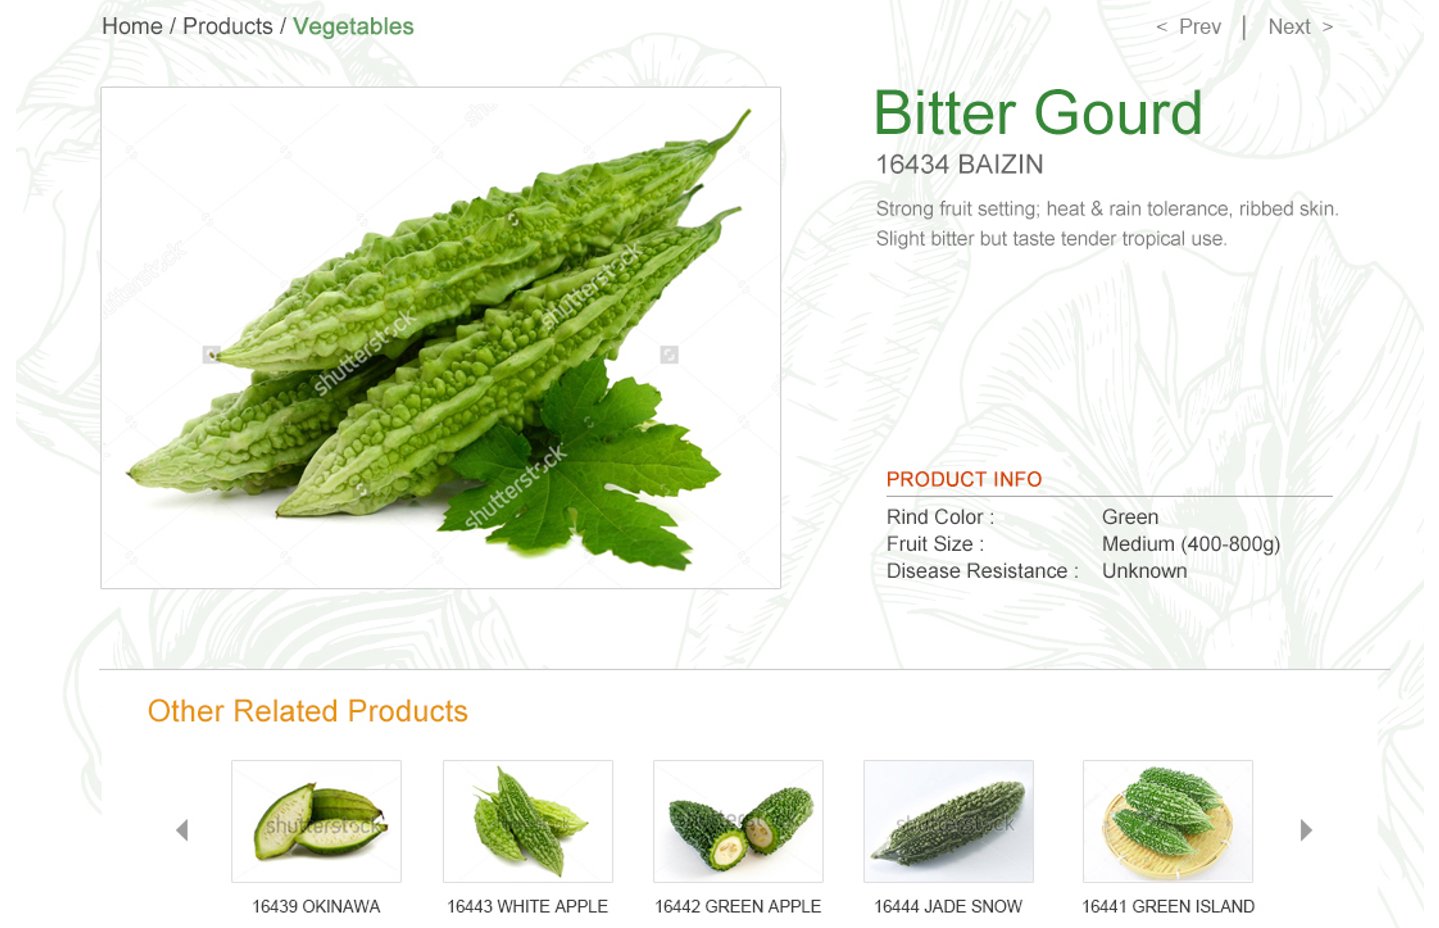 Fig2. It displays online catalogs of seedseedling suppliers in Taiwan to international buyers